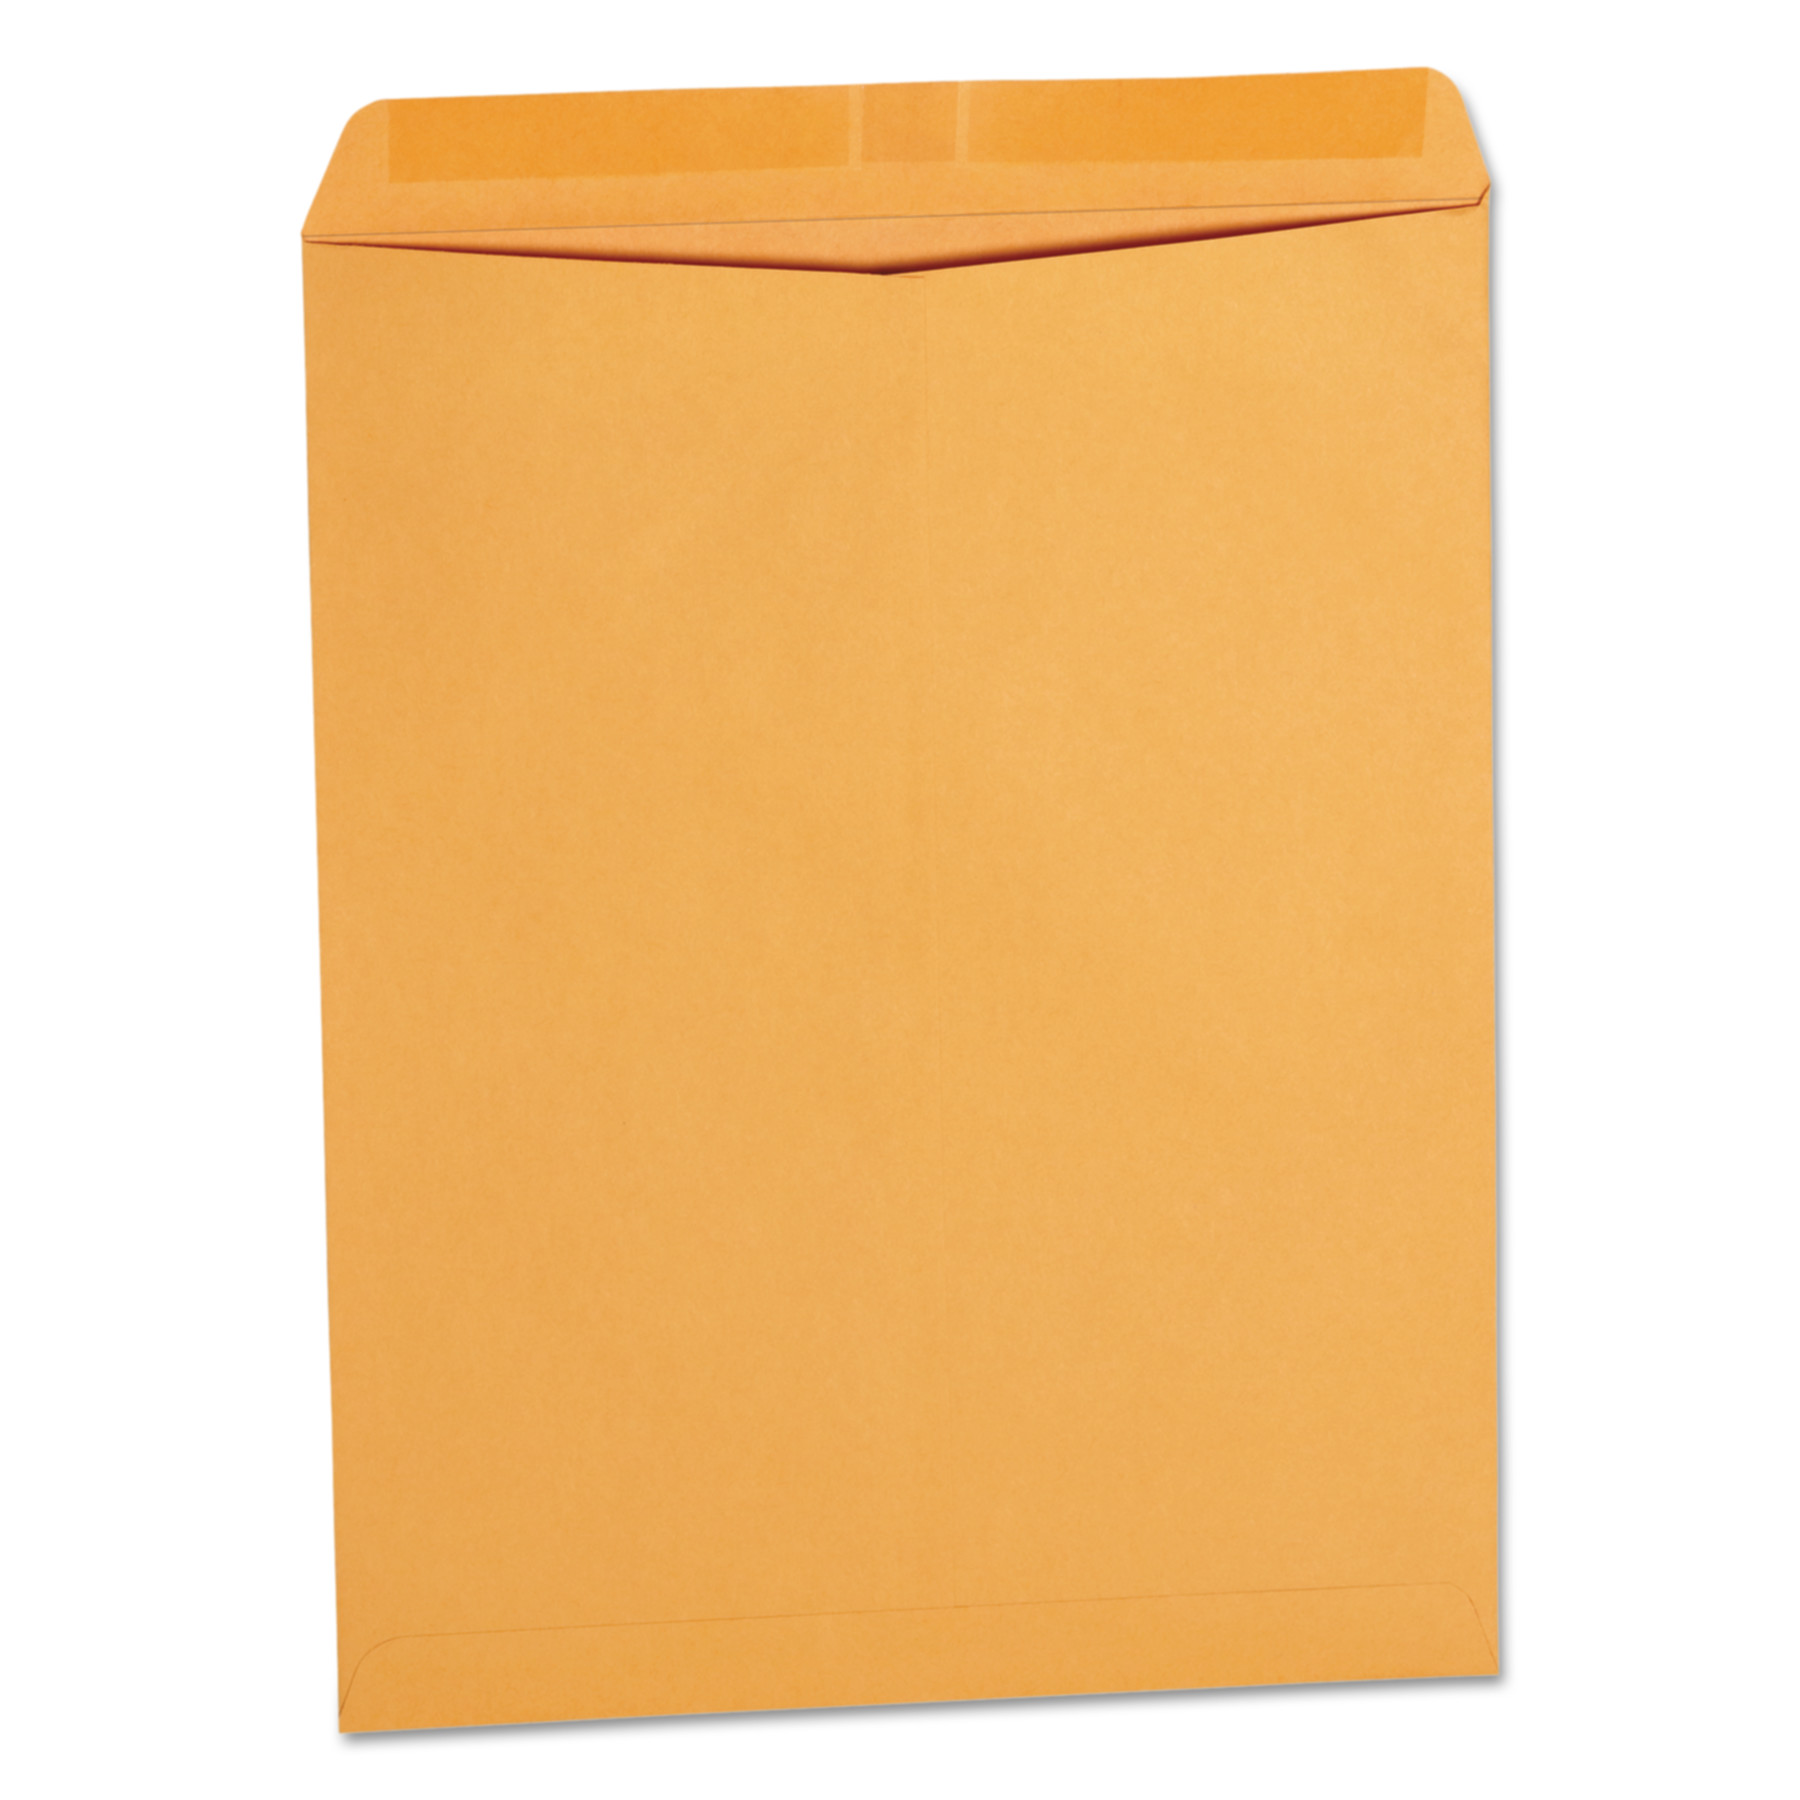 Catalog Envelope, Center Seam, 11 1/2 x 14 1/2, Brown Kraft, 250/Box